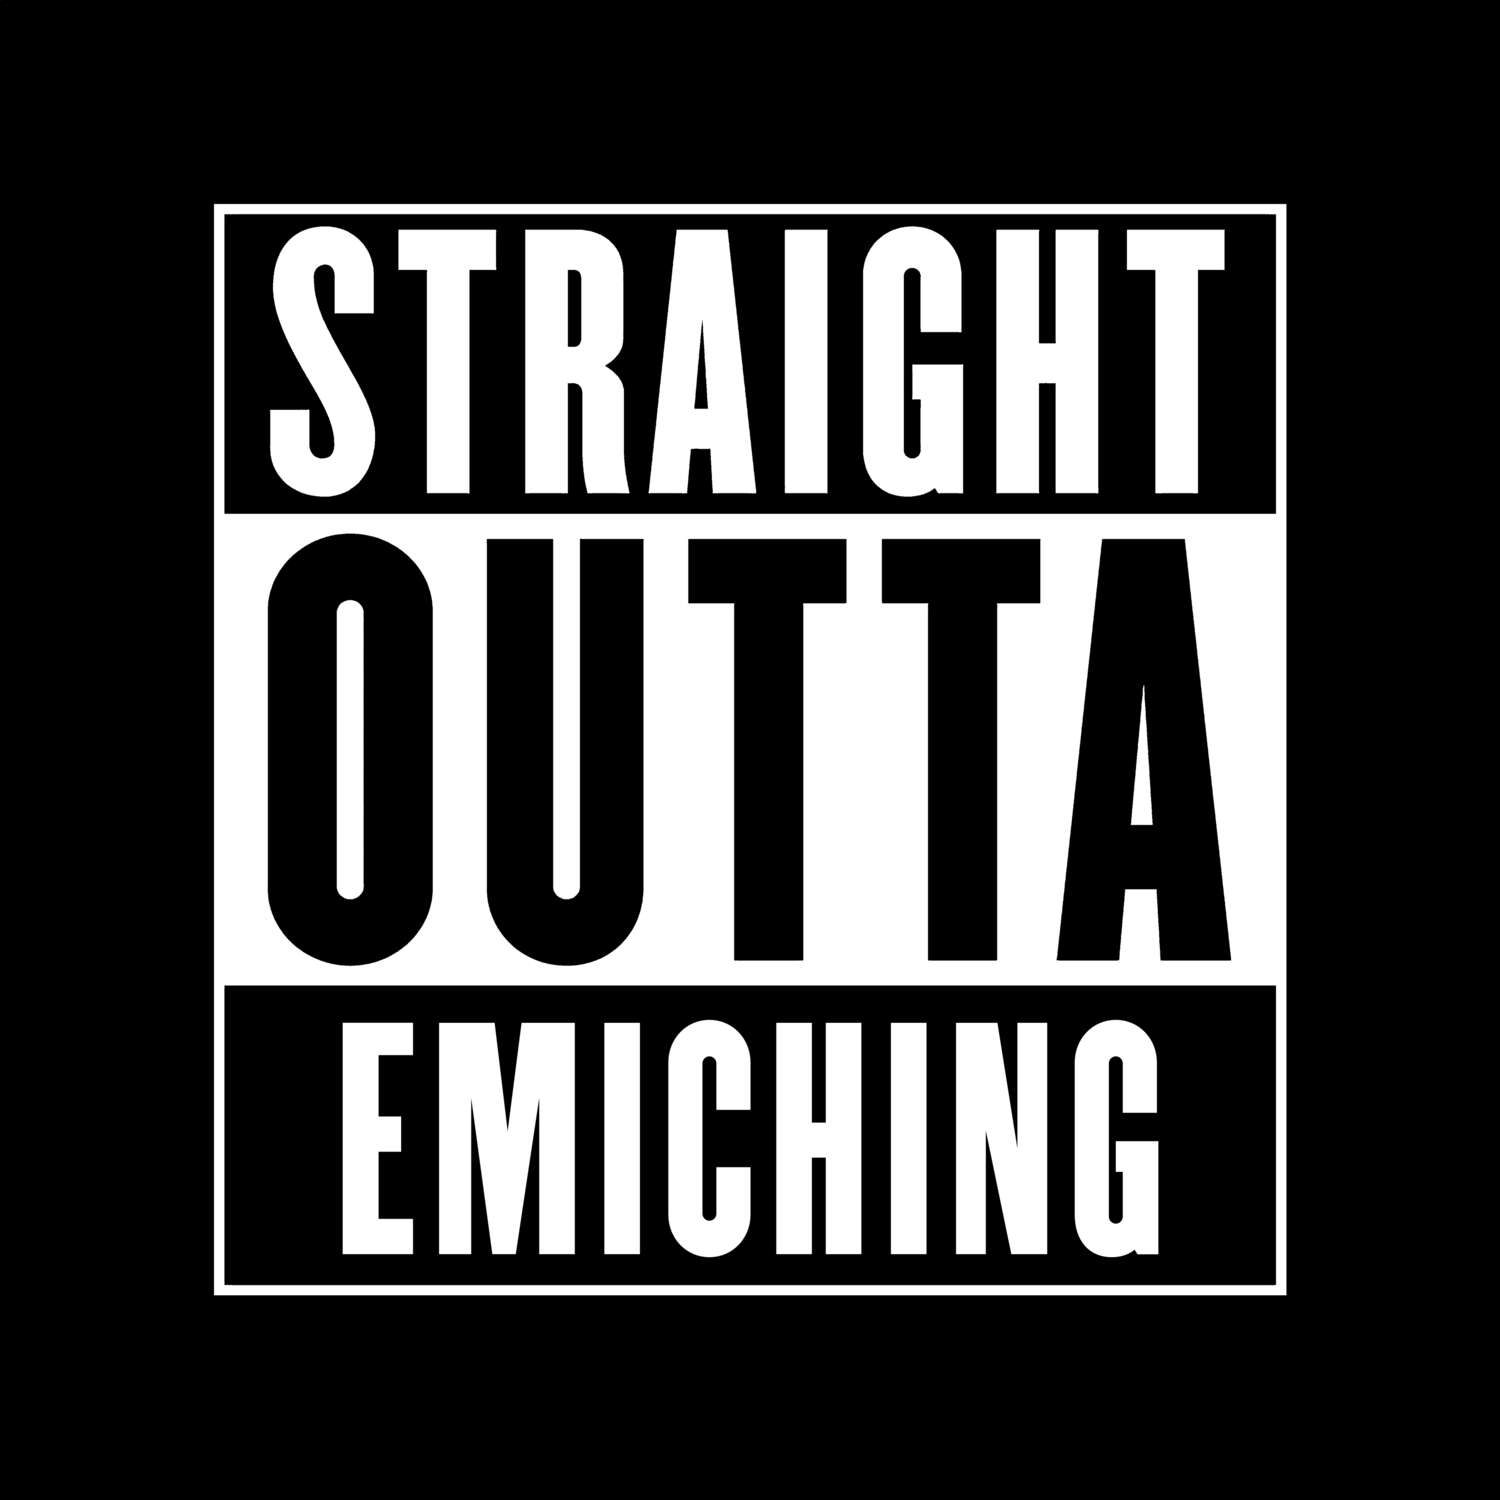 Emiching T-Shirt »Straight Outta«